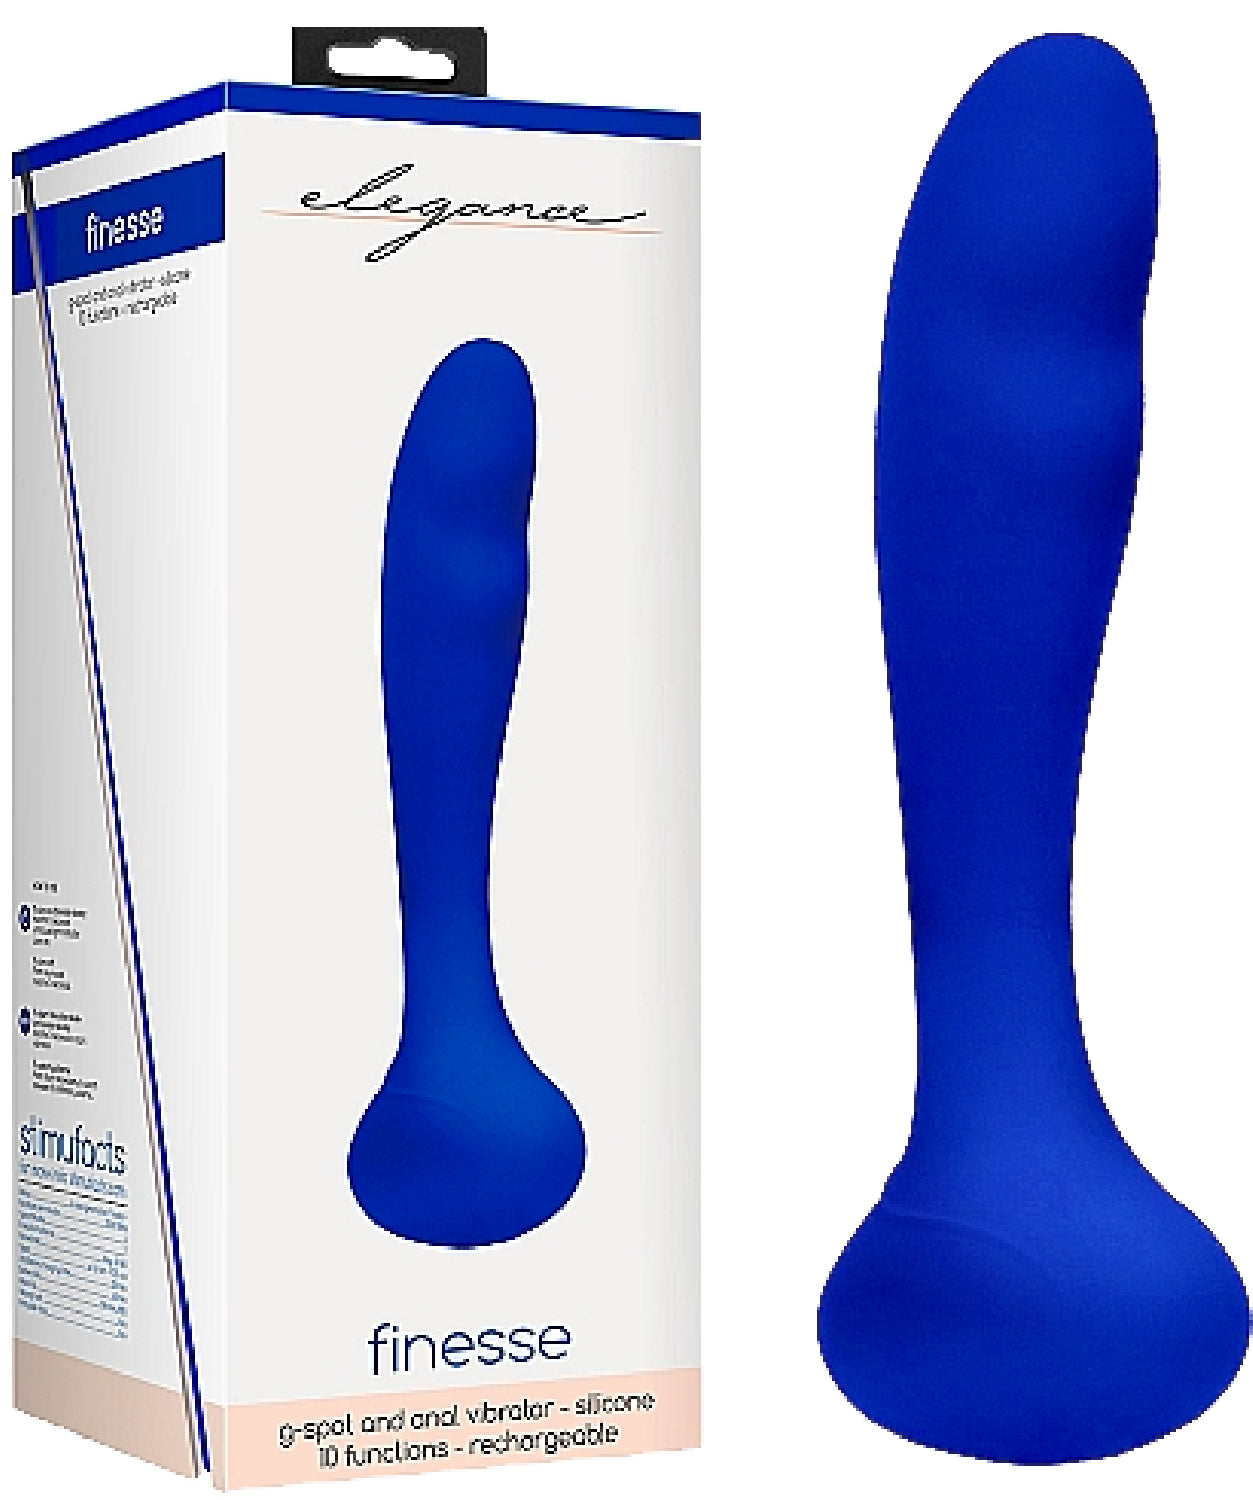 G-Spot And Prostate Vibrator - Finesse Blue - Club X